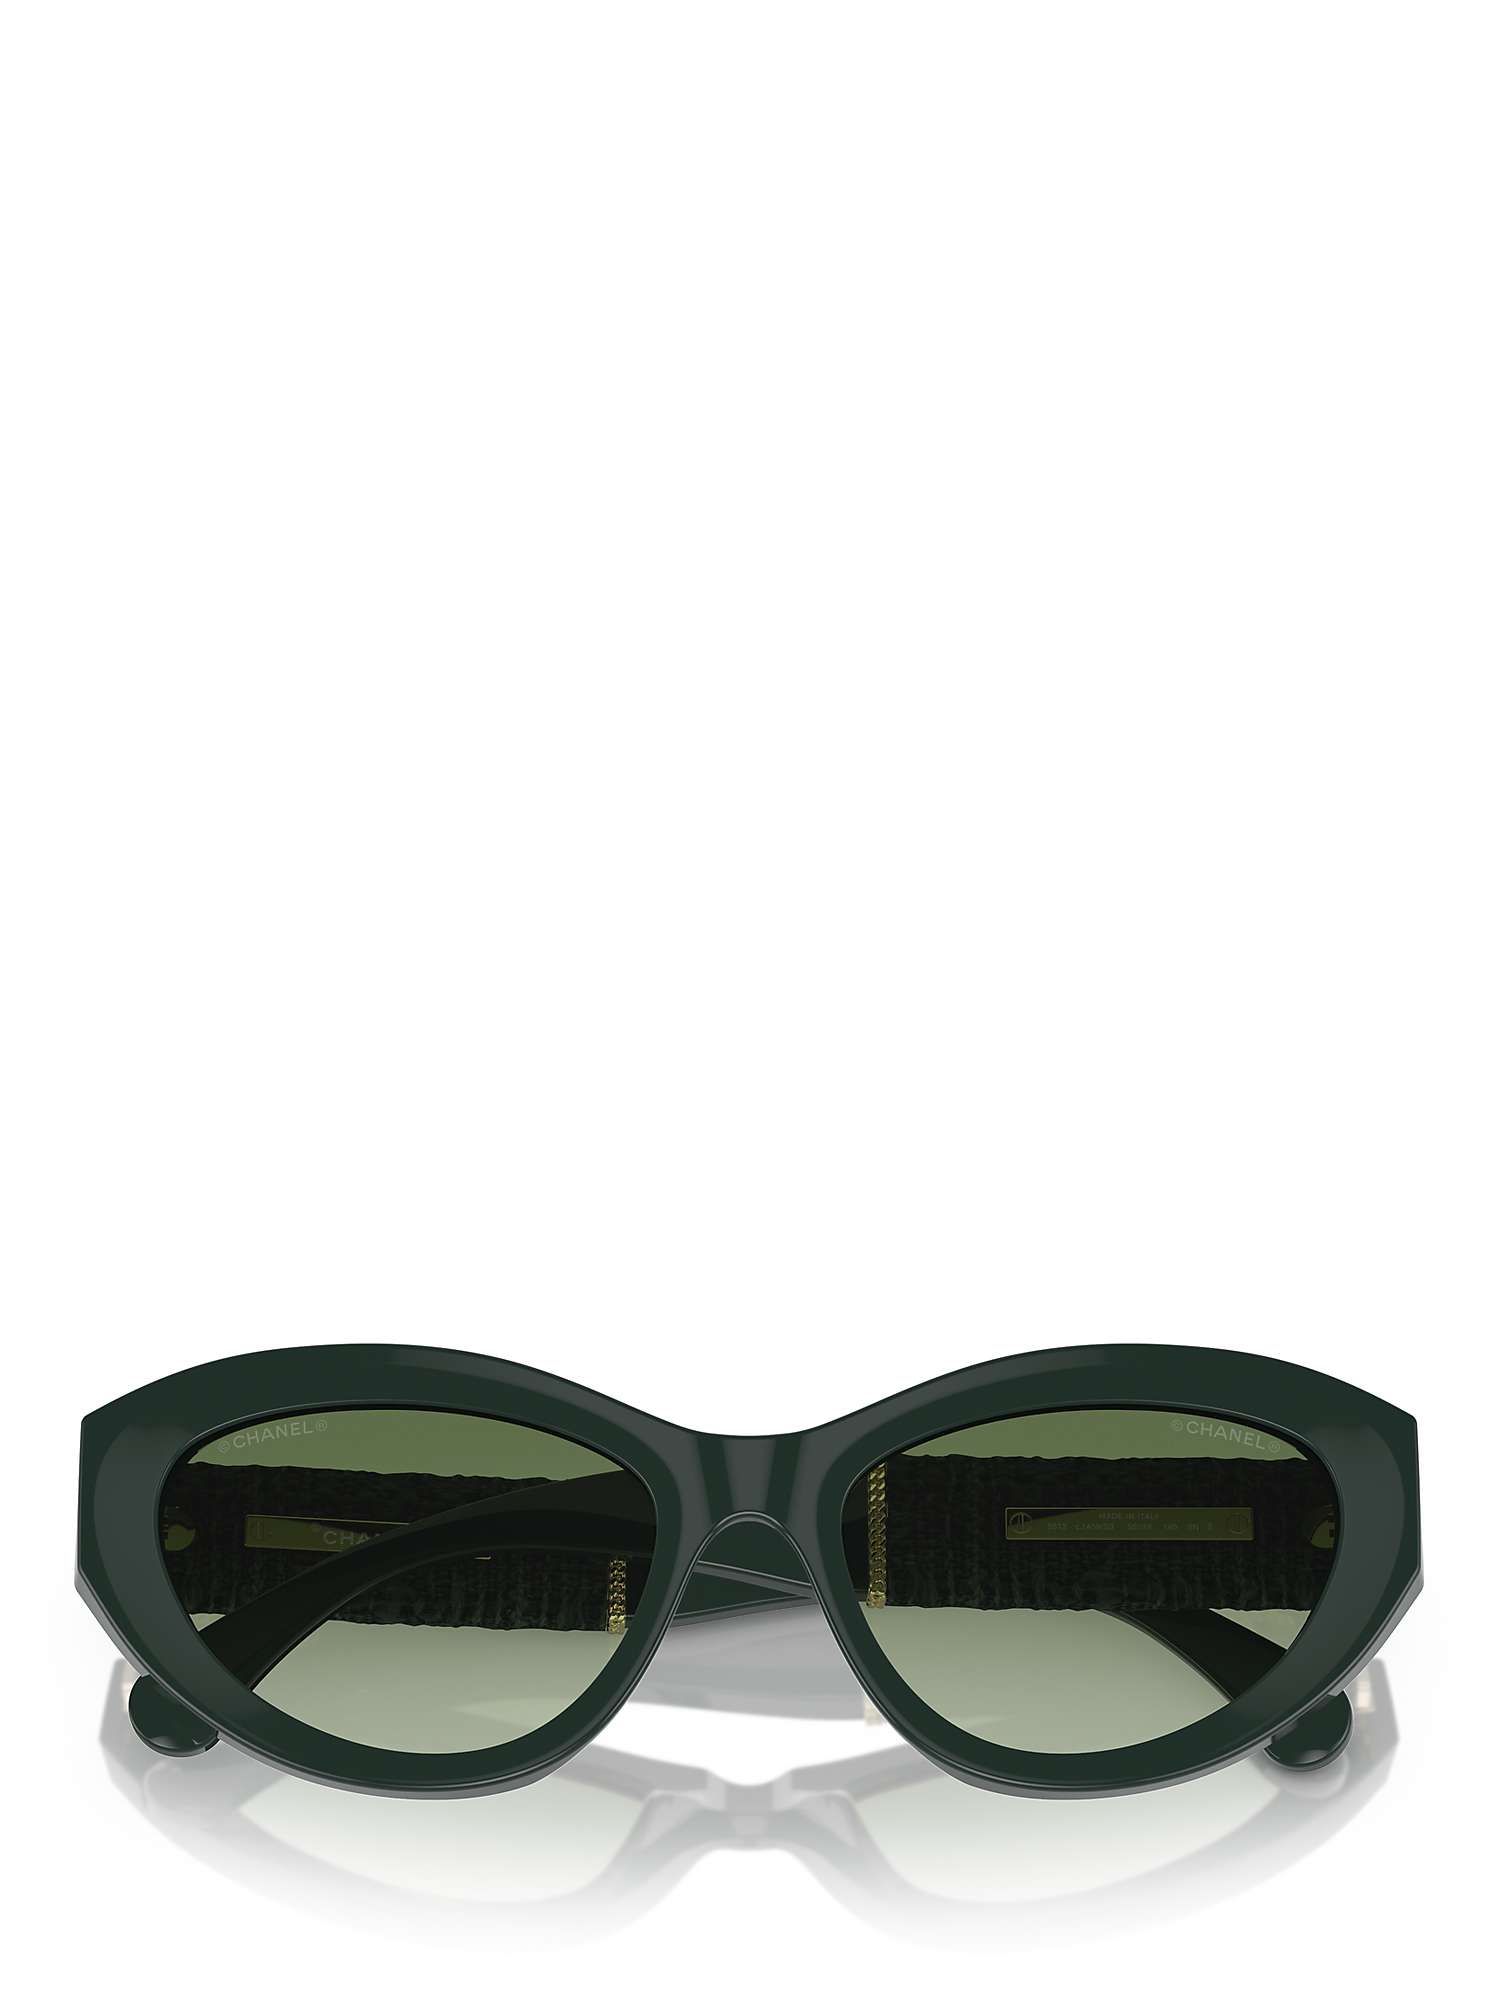 Buy CHANEL Cat Eye Sunglasses CH5513 Green Vandome/Green Gradient Online at johnlewis.com